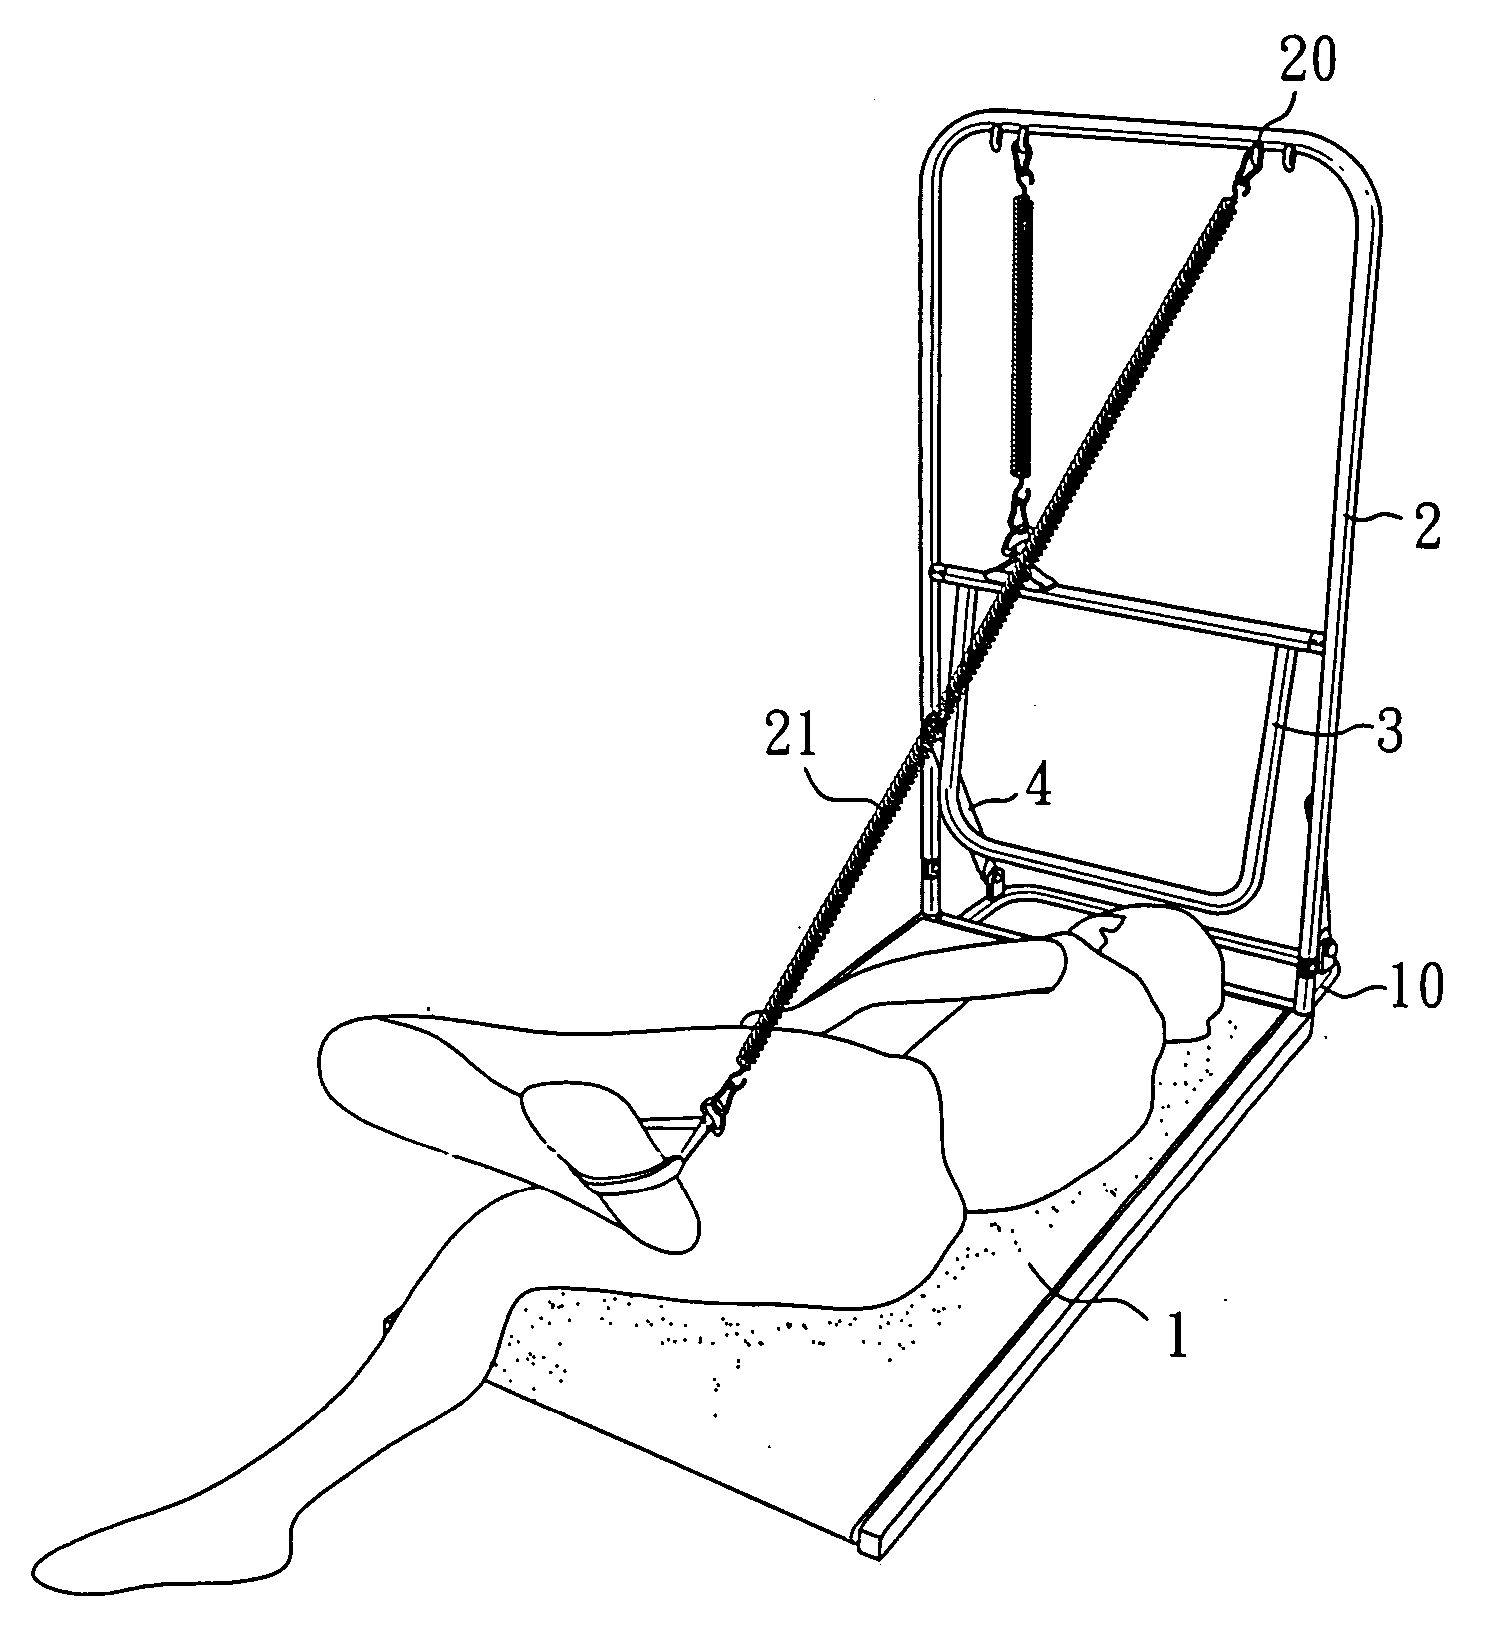 Folding collapsible exercising apparatus